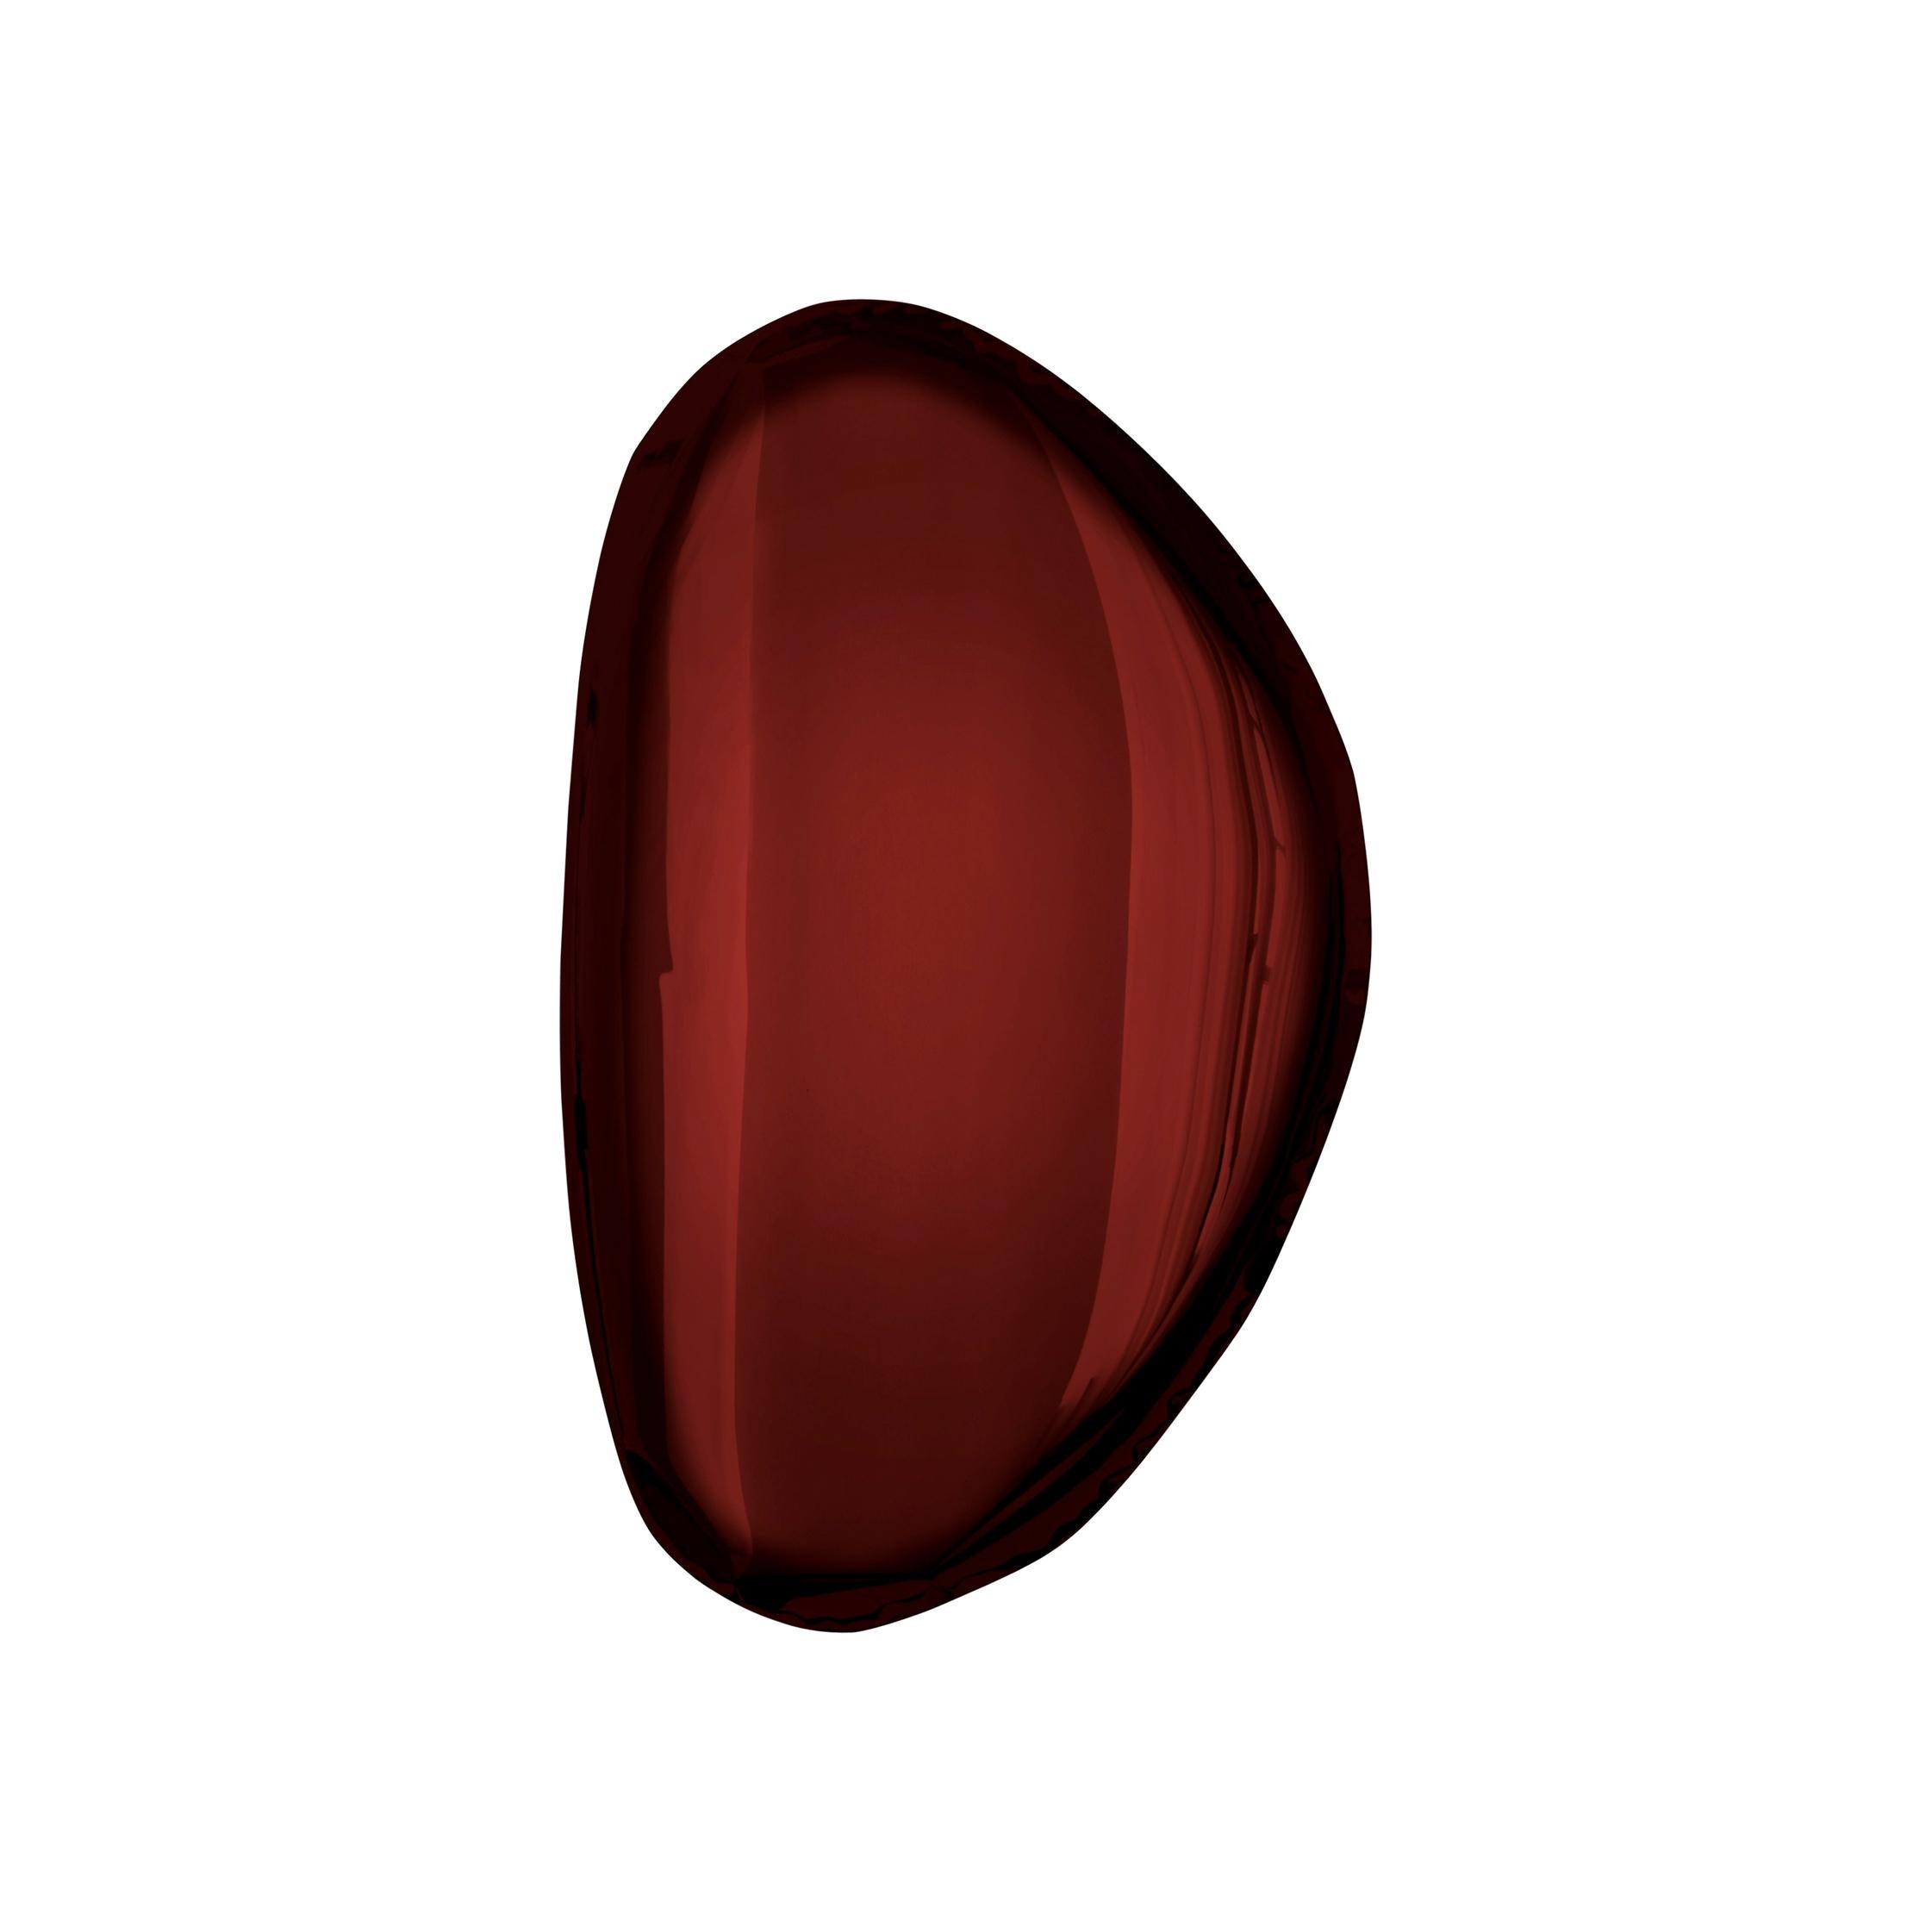 Mirror Tafla O2 Rubin Red, in Polished Stainless Steel by Zieta For Sale